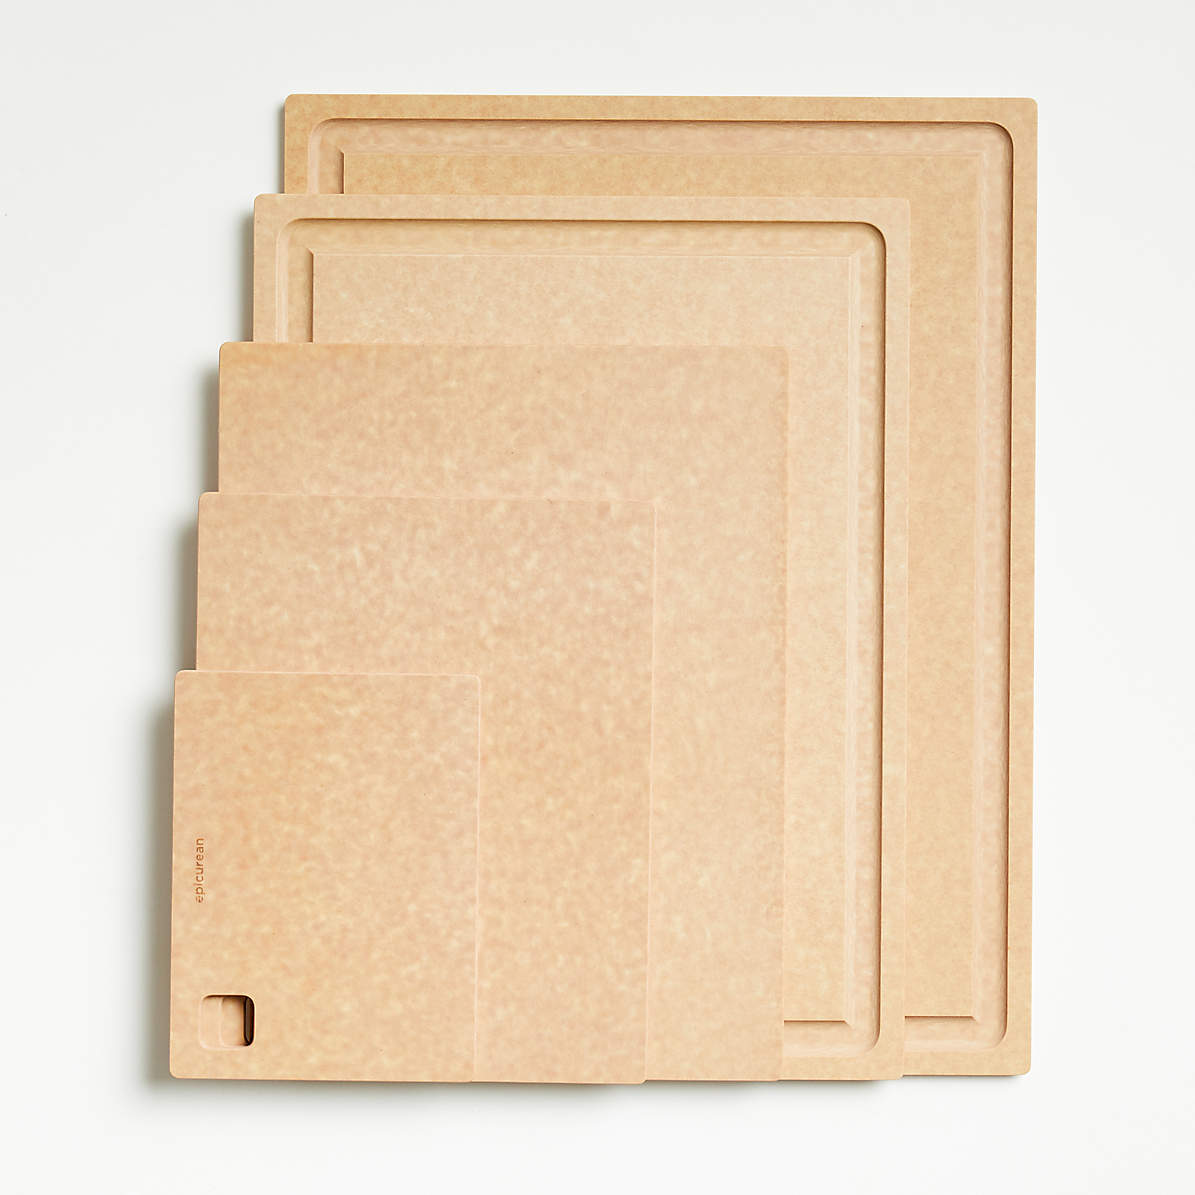 Epicurean Paper Composite Cutting Board 1 Ea, Utensils